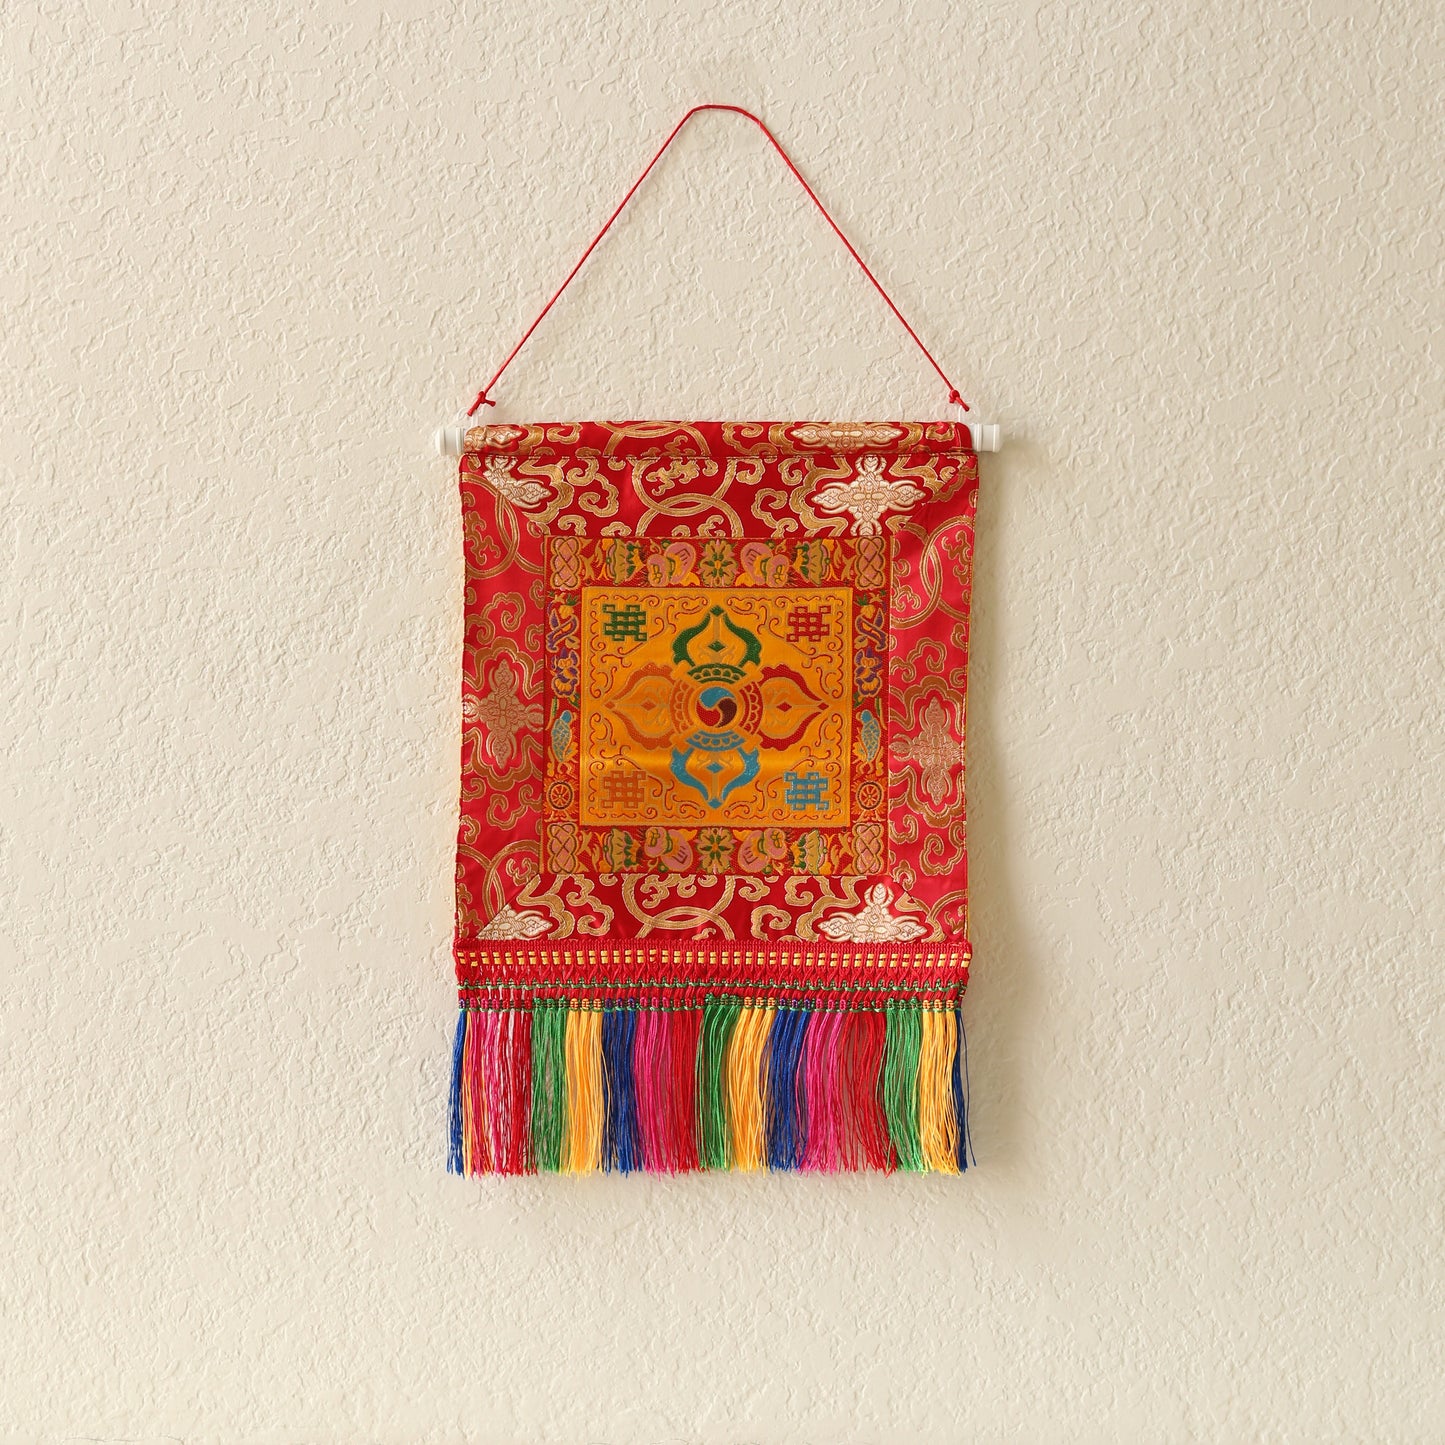 Tibetan Buddhist Cross Vajra Dorje Wall Hanging Tassels Small Tapestry, 18"X12", Namaste Art Boho Gift Home Décor